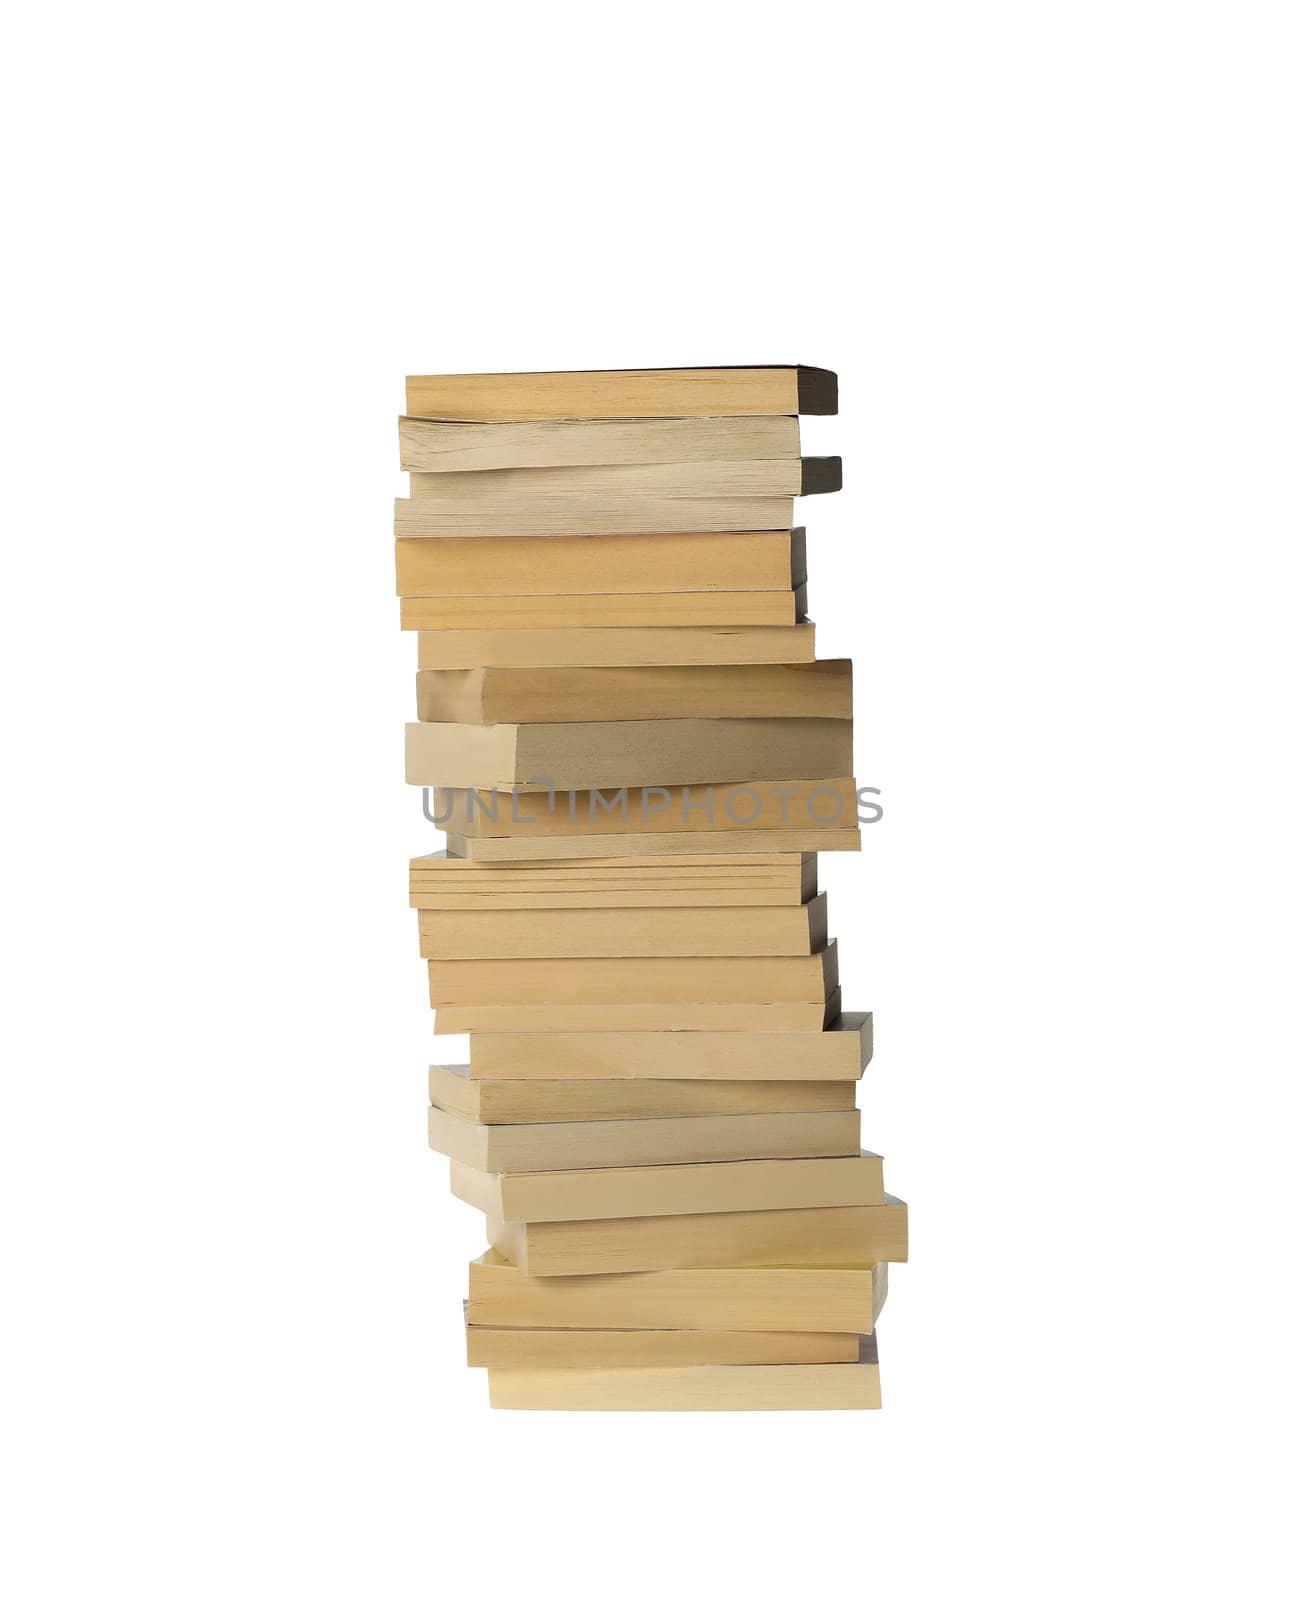 Pile of Books by gemenacom